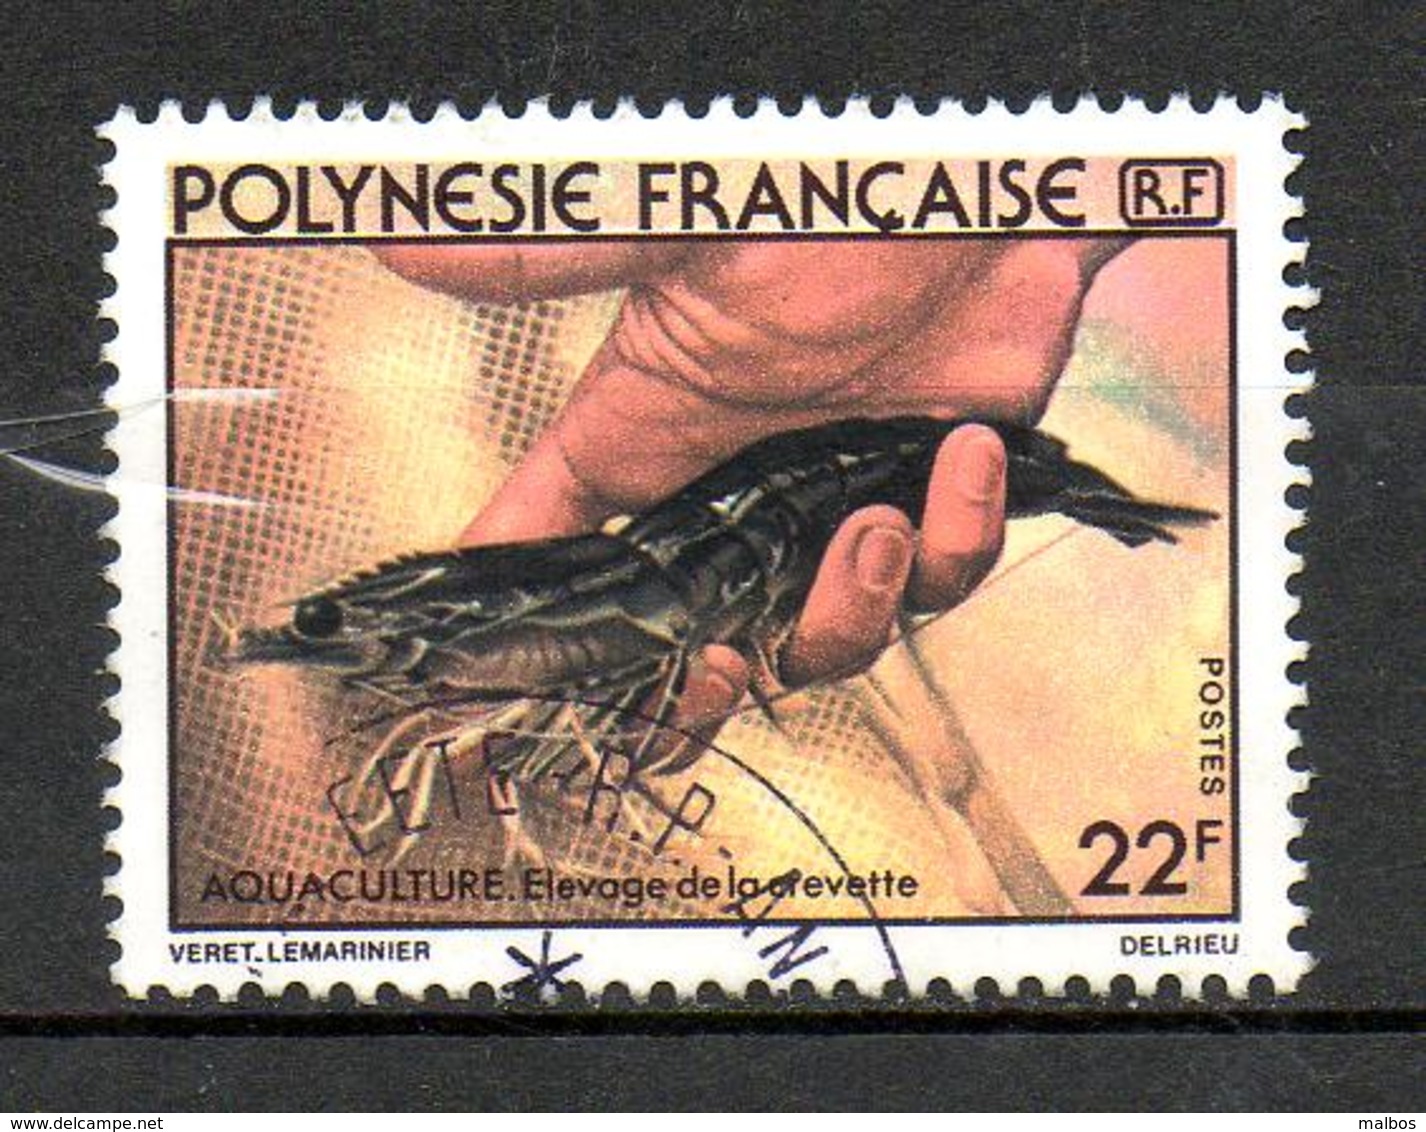 POLYNESIE Fr   1980   (o)   Y&T N° 147 + 148 + 151 + 159 + 161 + 162 - Used Stamps